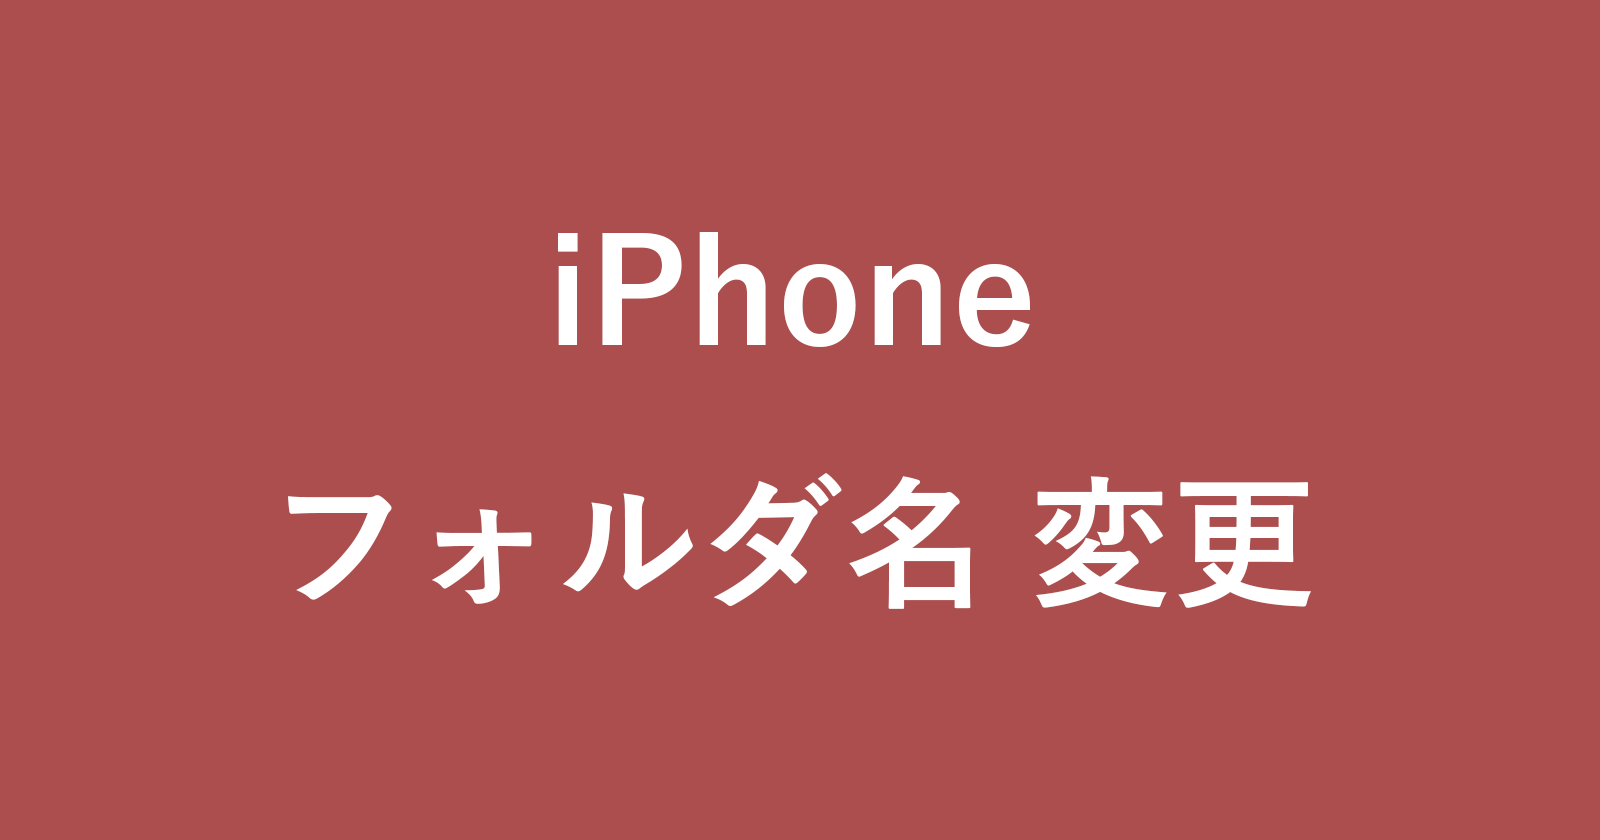 iphone rename folders